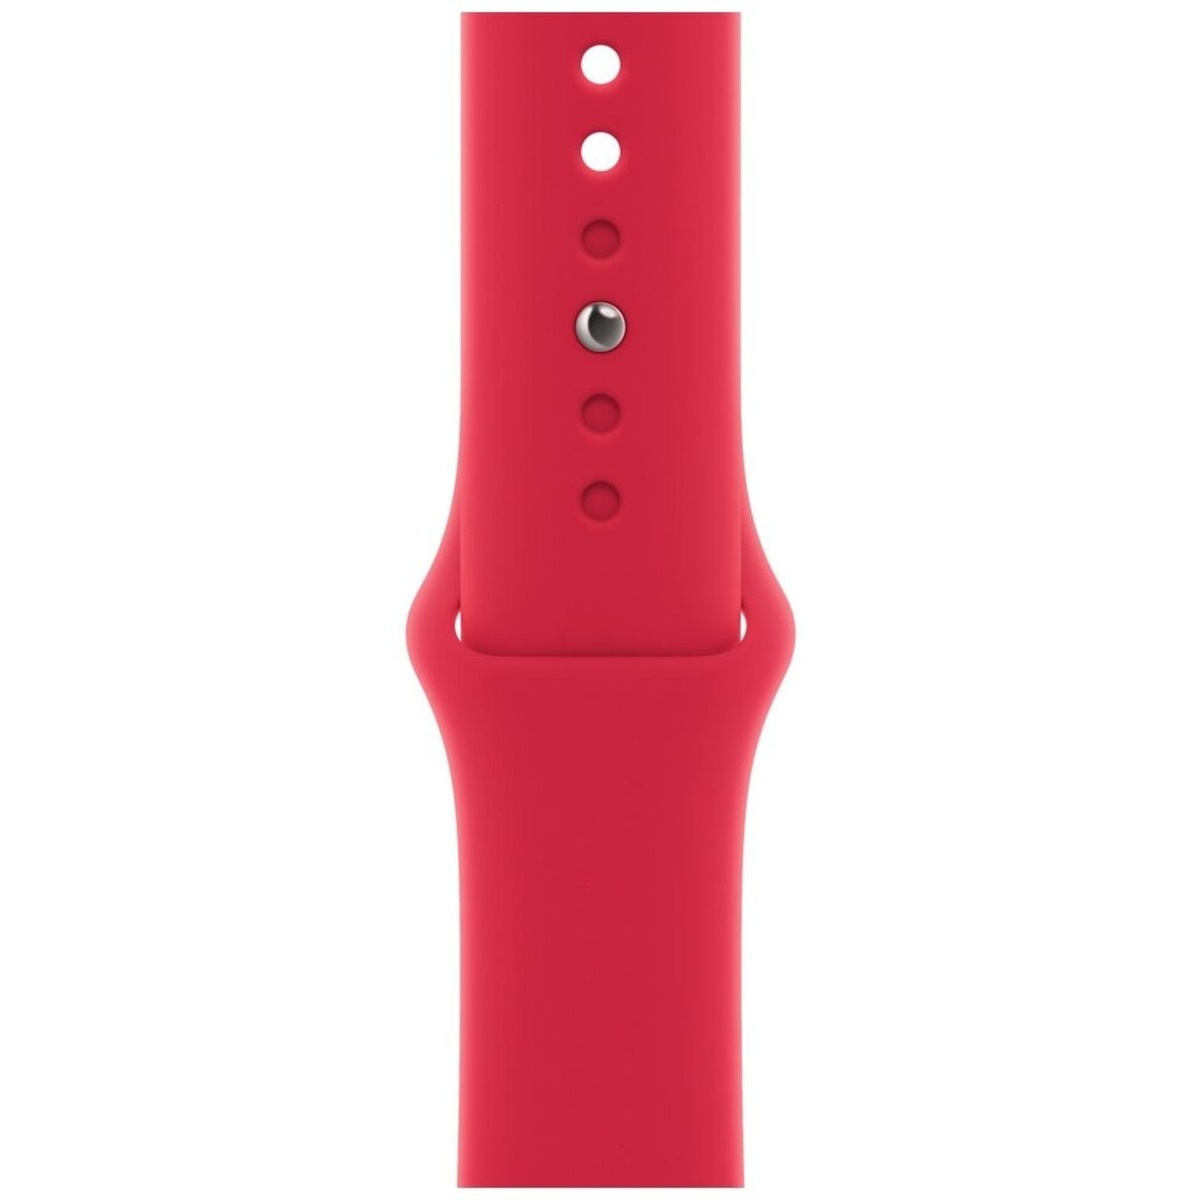 Умные часы Apple Watch Series 8 41mm Cellular Aluminum Case with Sport Band (Цвет: Red)